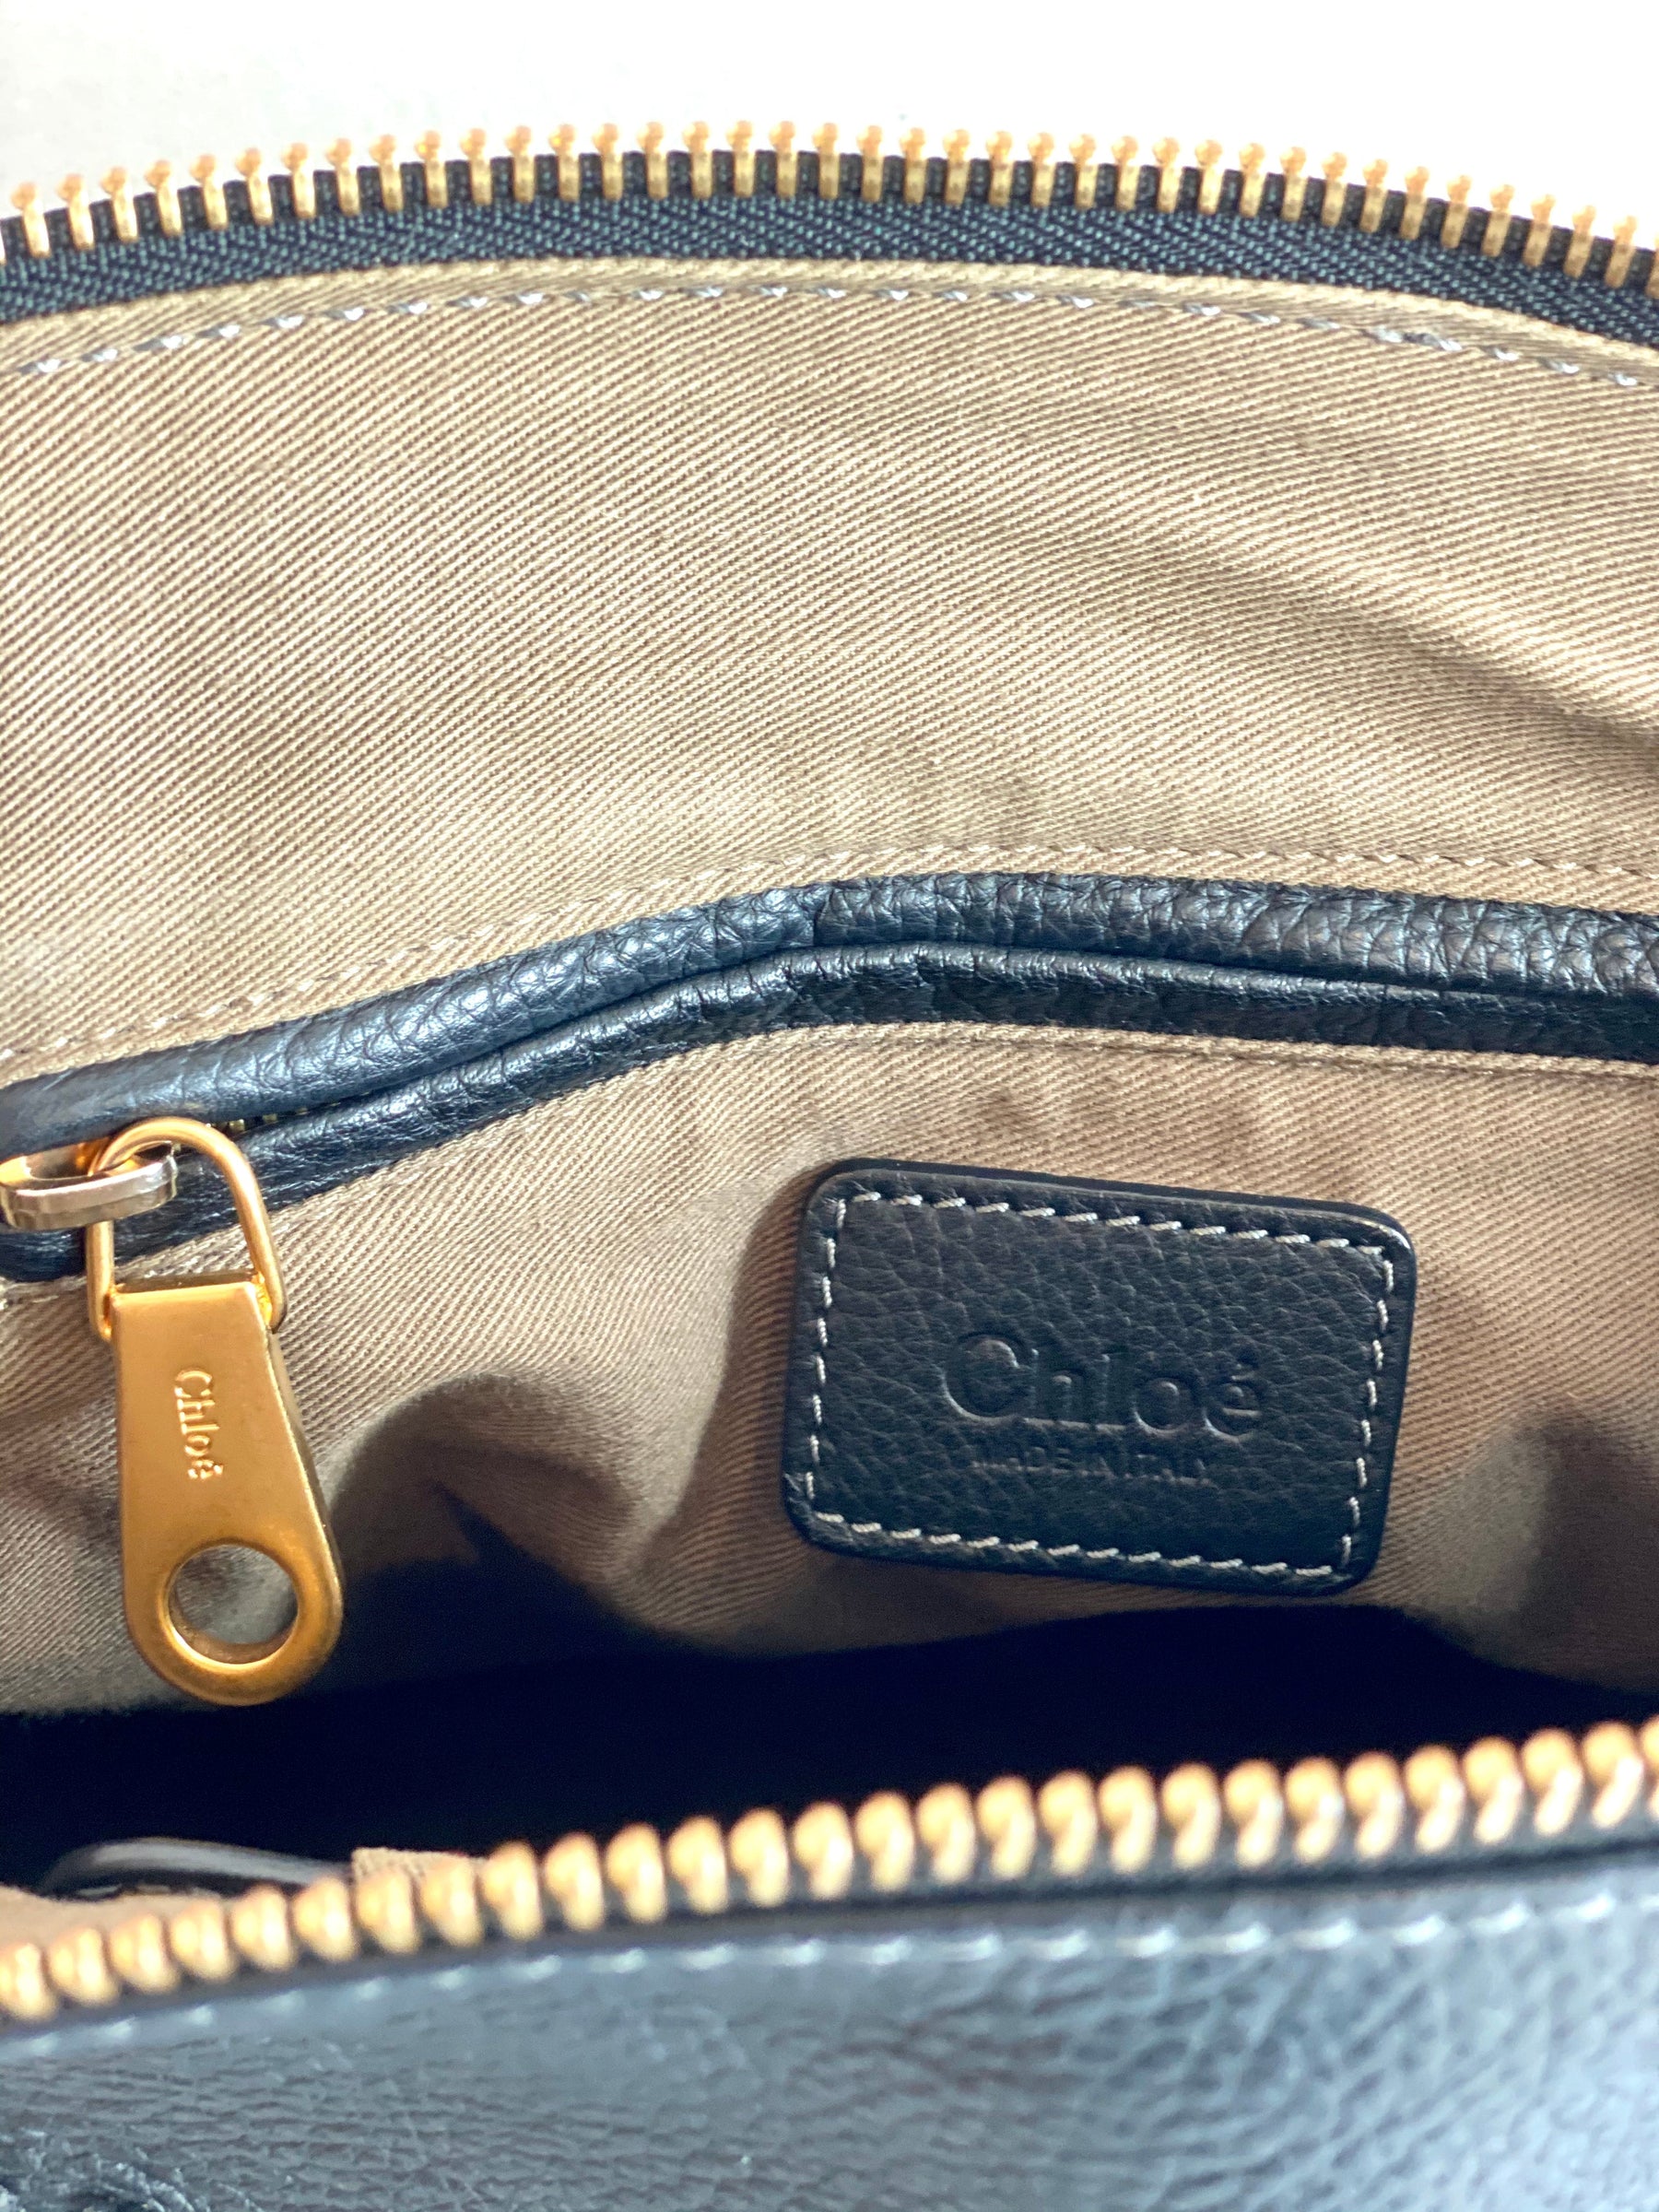 inside black chloe purse